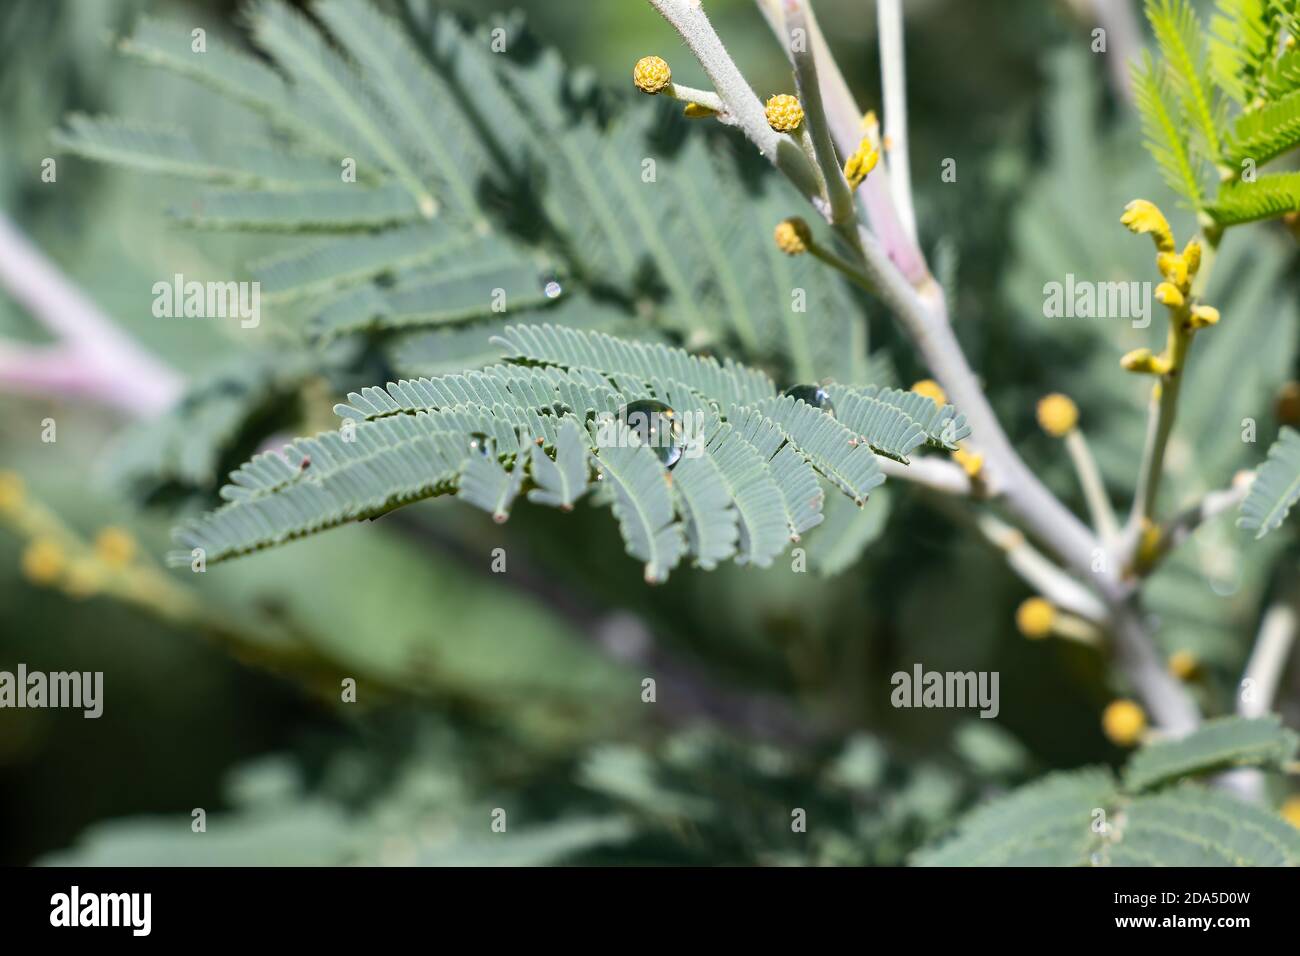 Water drop on fresh green bipinnate leaf Stock Photo